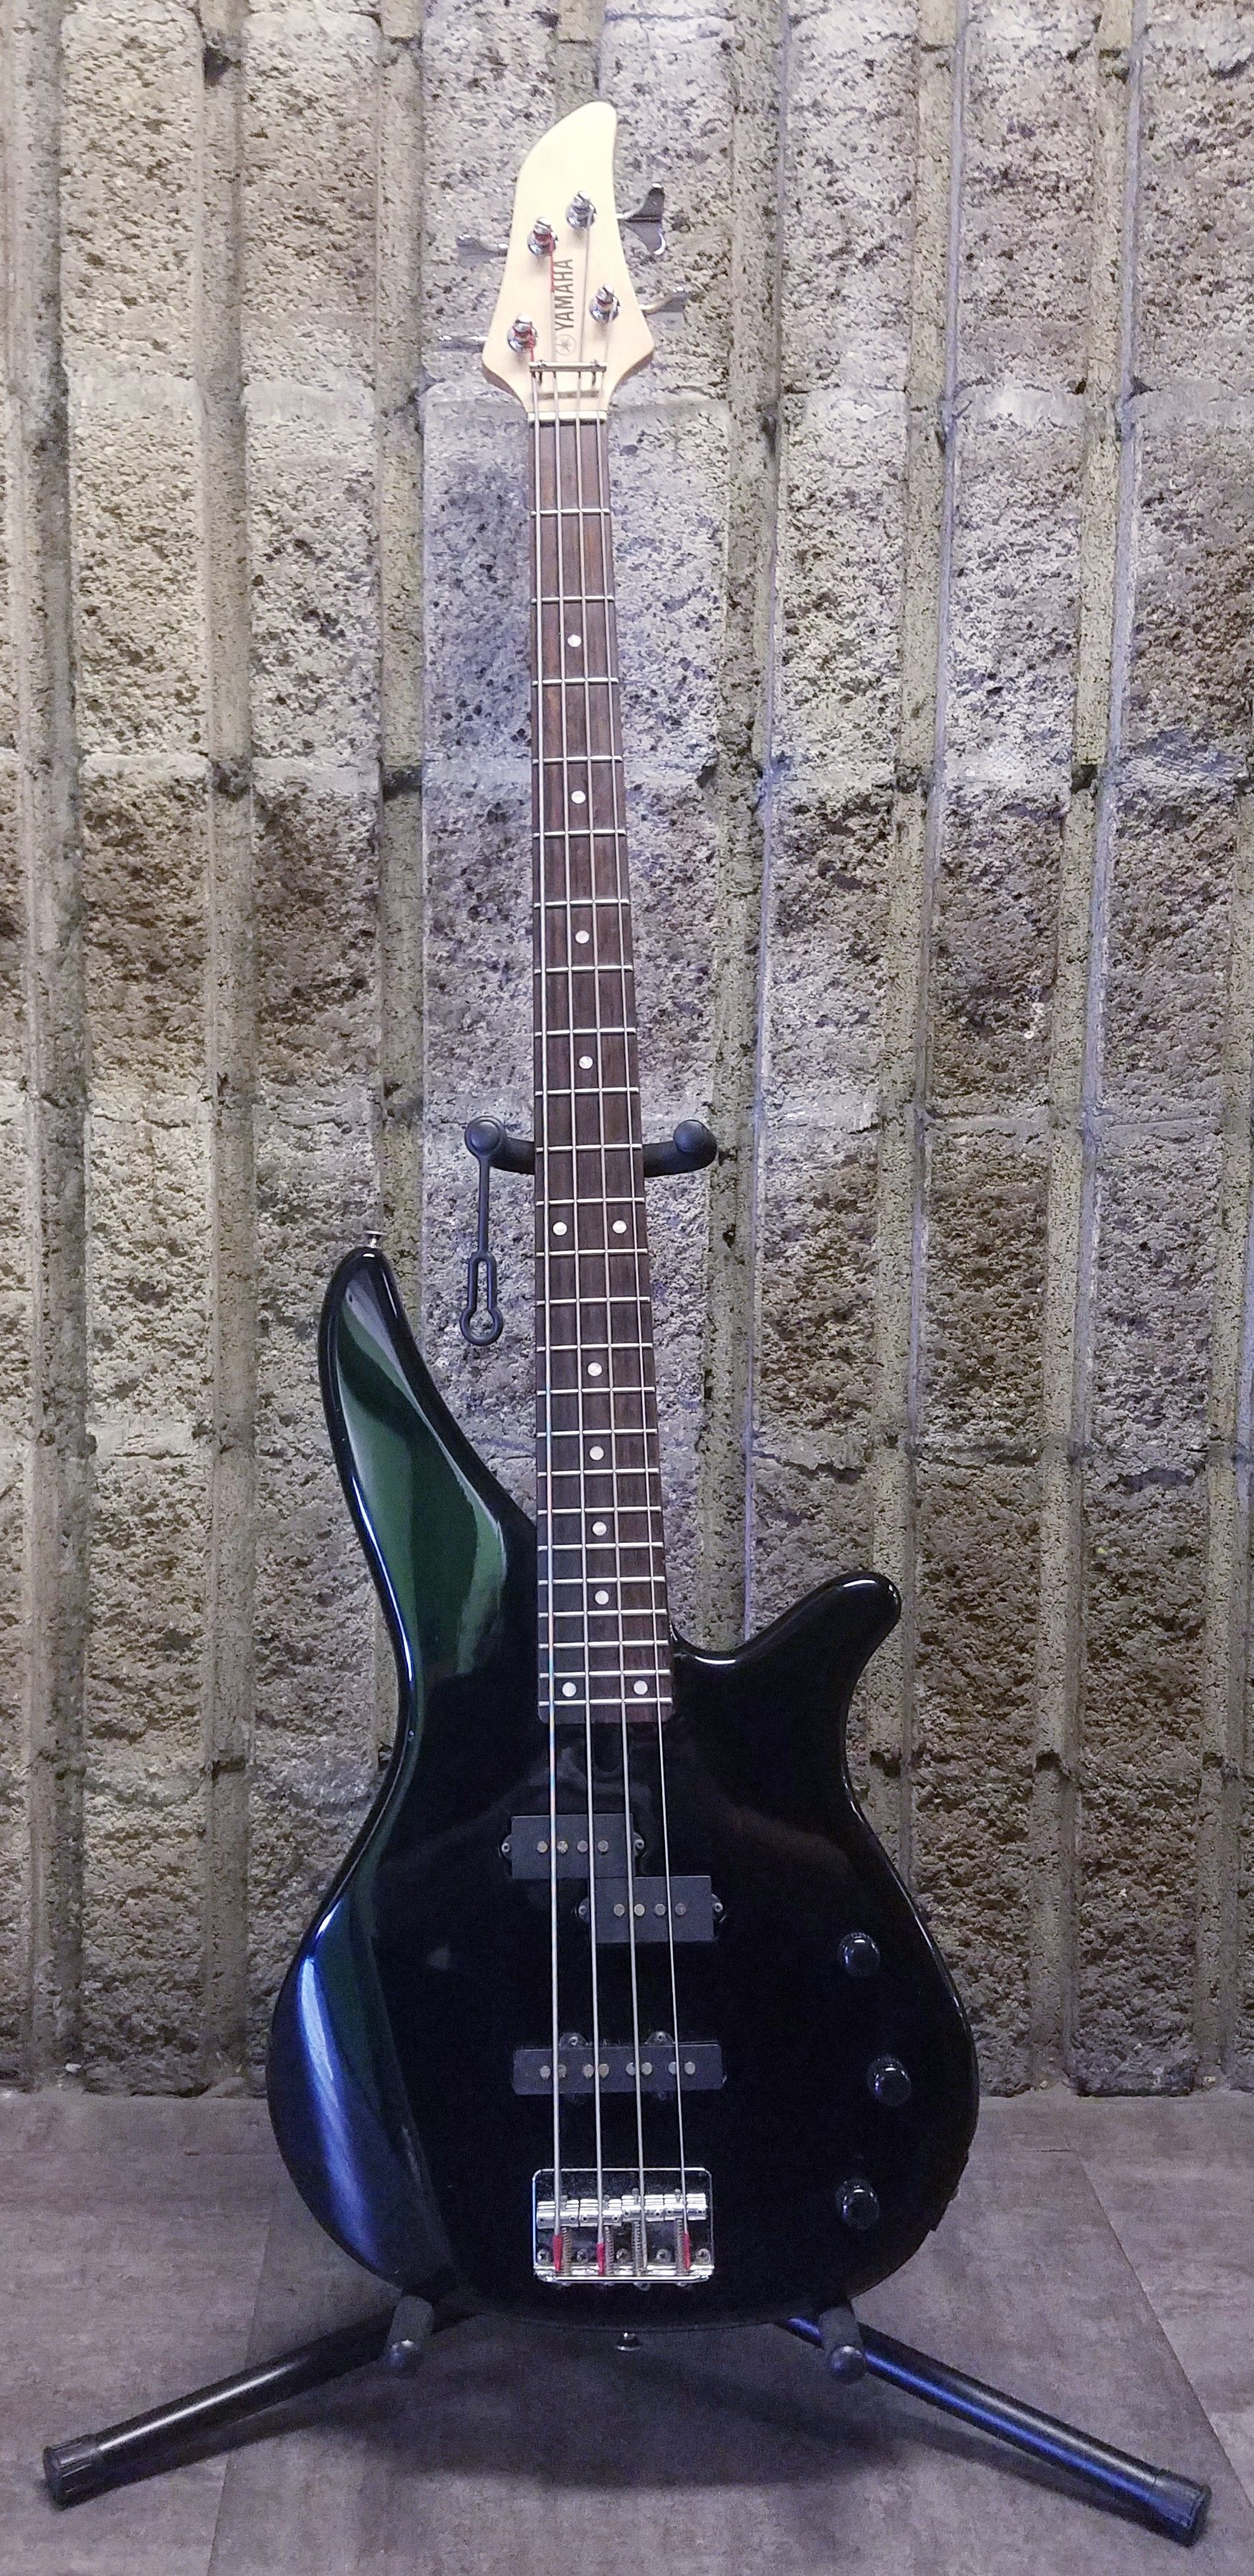 Yamaha Bass Guitar - Excellent Quality - Professional Electric Guitar 4 String Bass Guitar